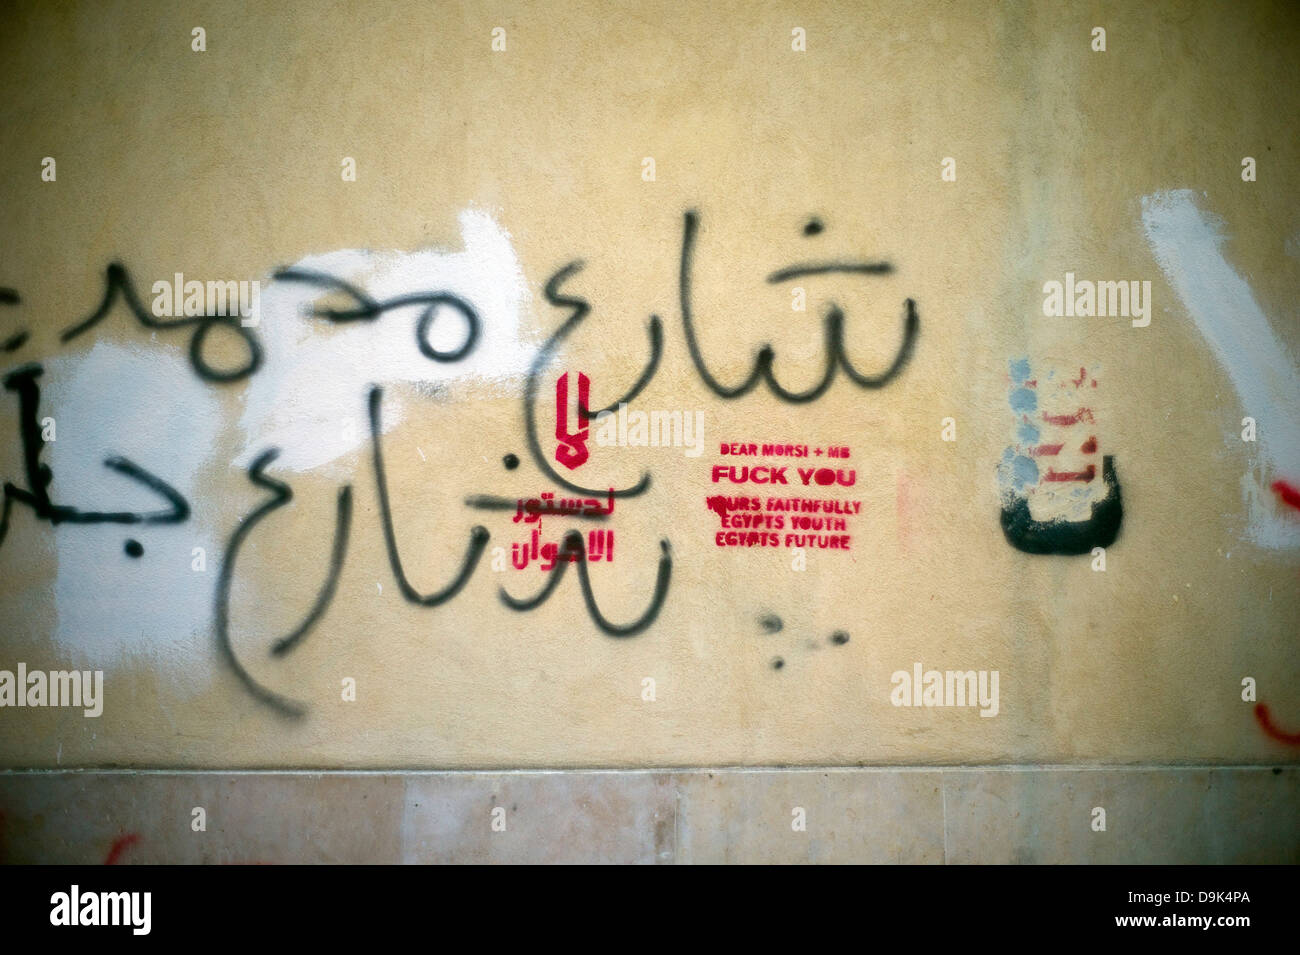 Graffiti opposing President Mohamed Morsi of the Muslim Brotherhood on a wall, Cairo, Egypt Stock Photo